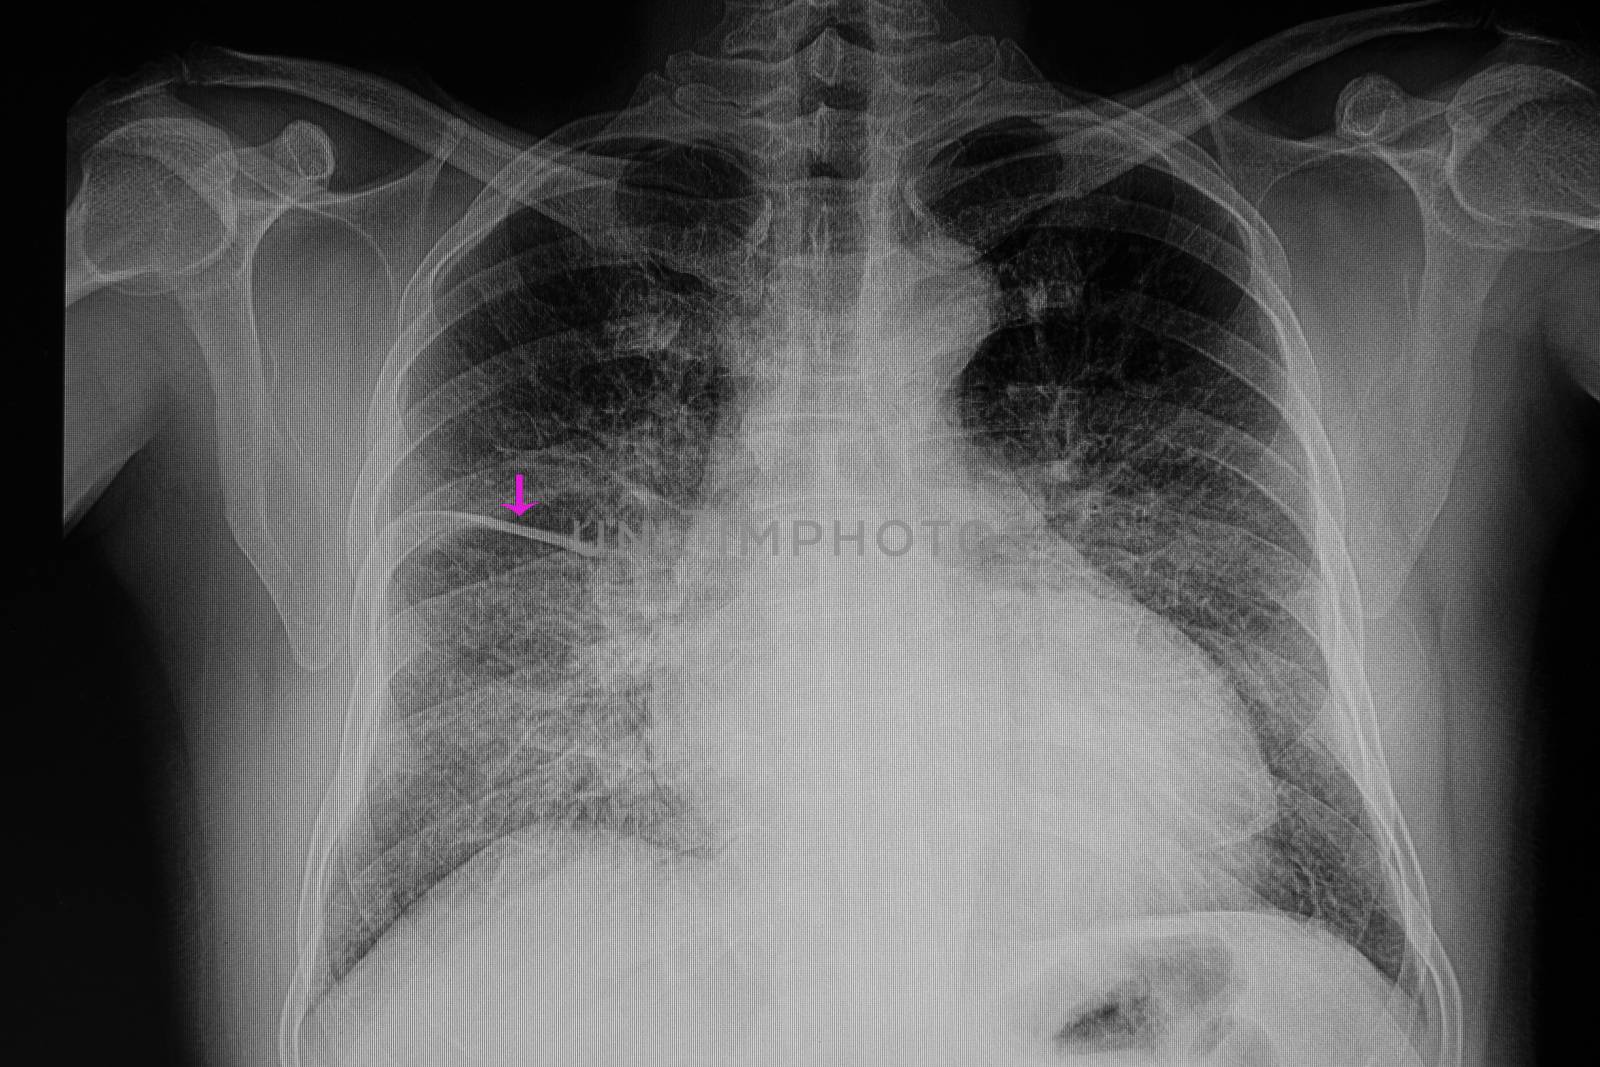 congestive heart failure and pulmonary edema by Nawoot